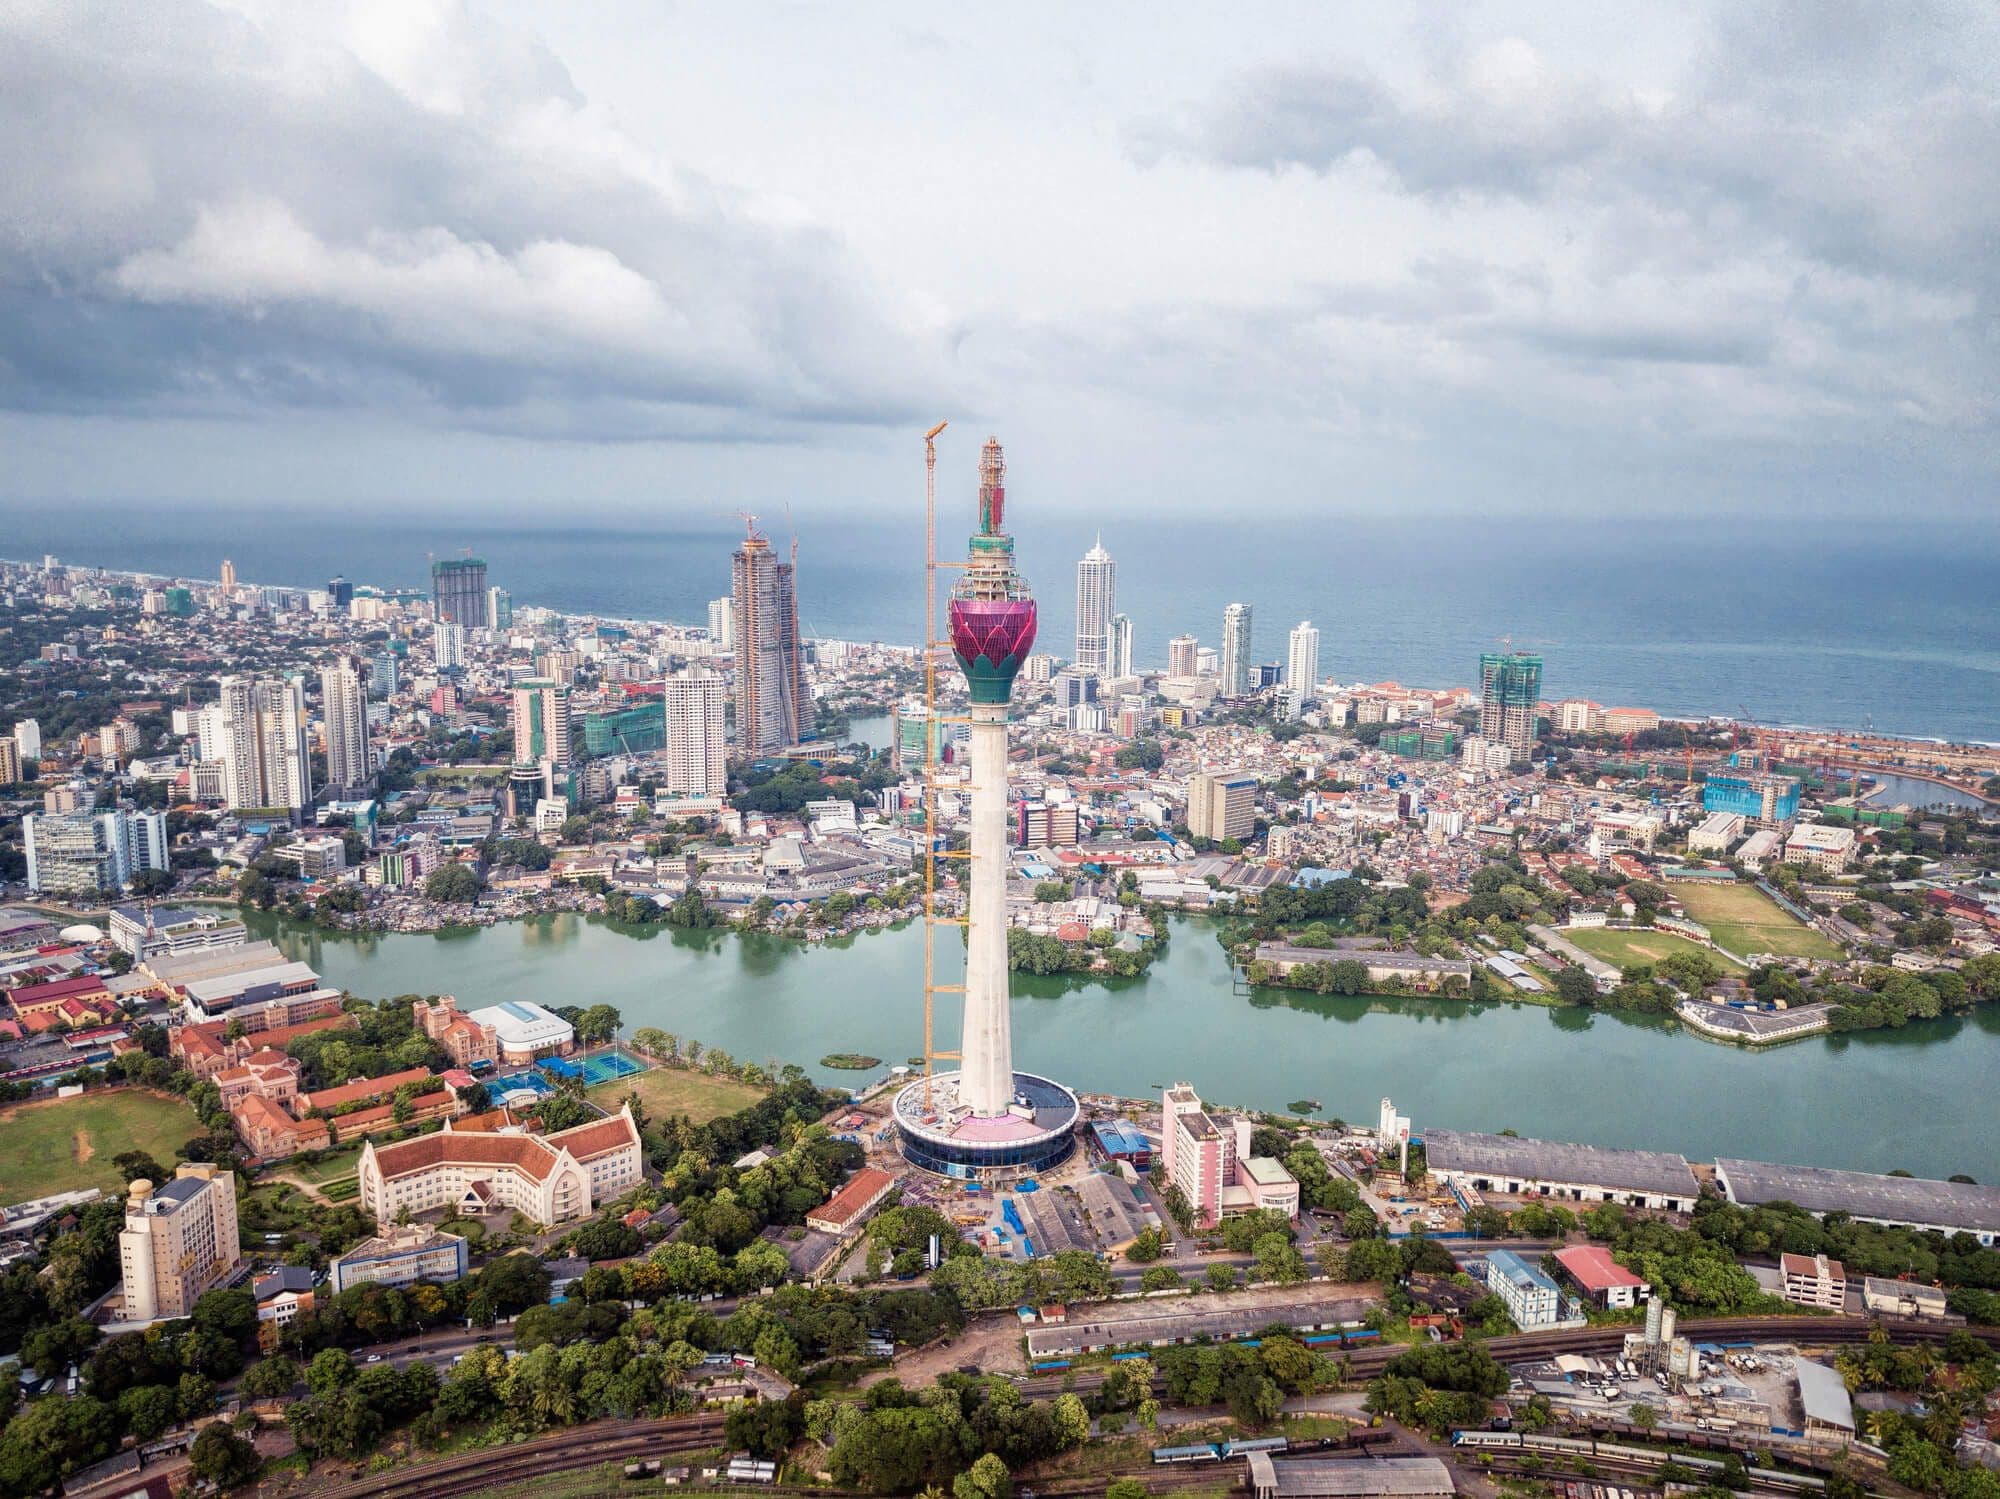 Drone photo of Colombo city, Sri Lanka.